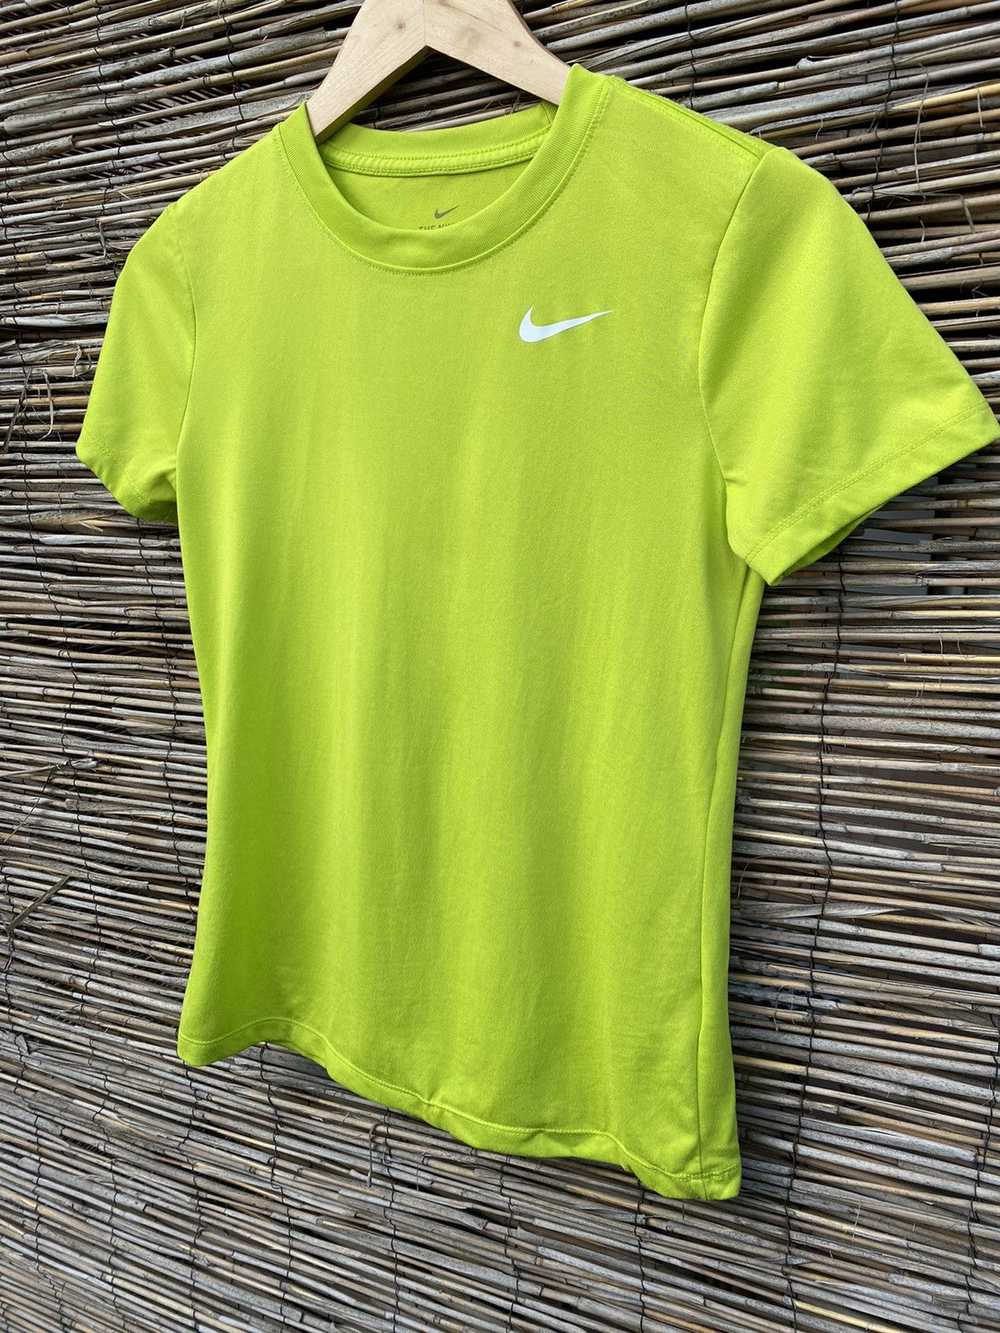 Nike × Vintage Nike Dri-fit Shirt - image 4